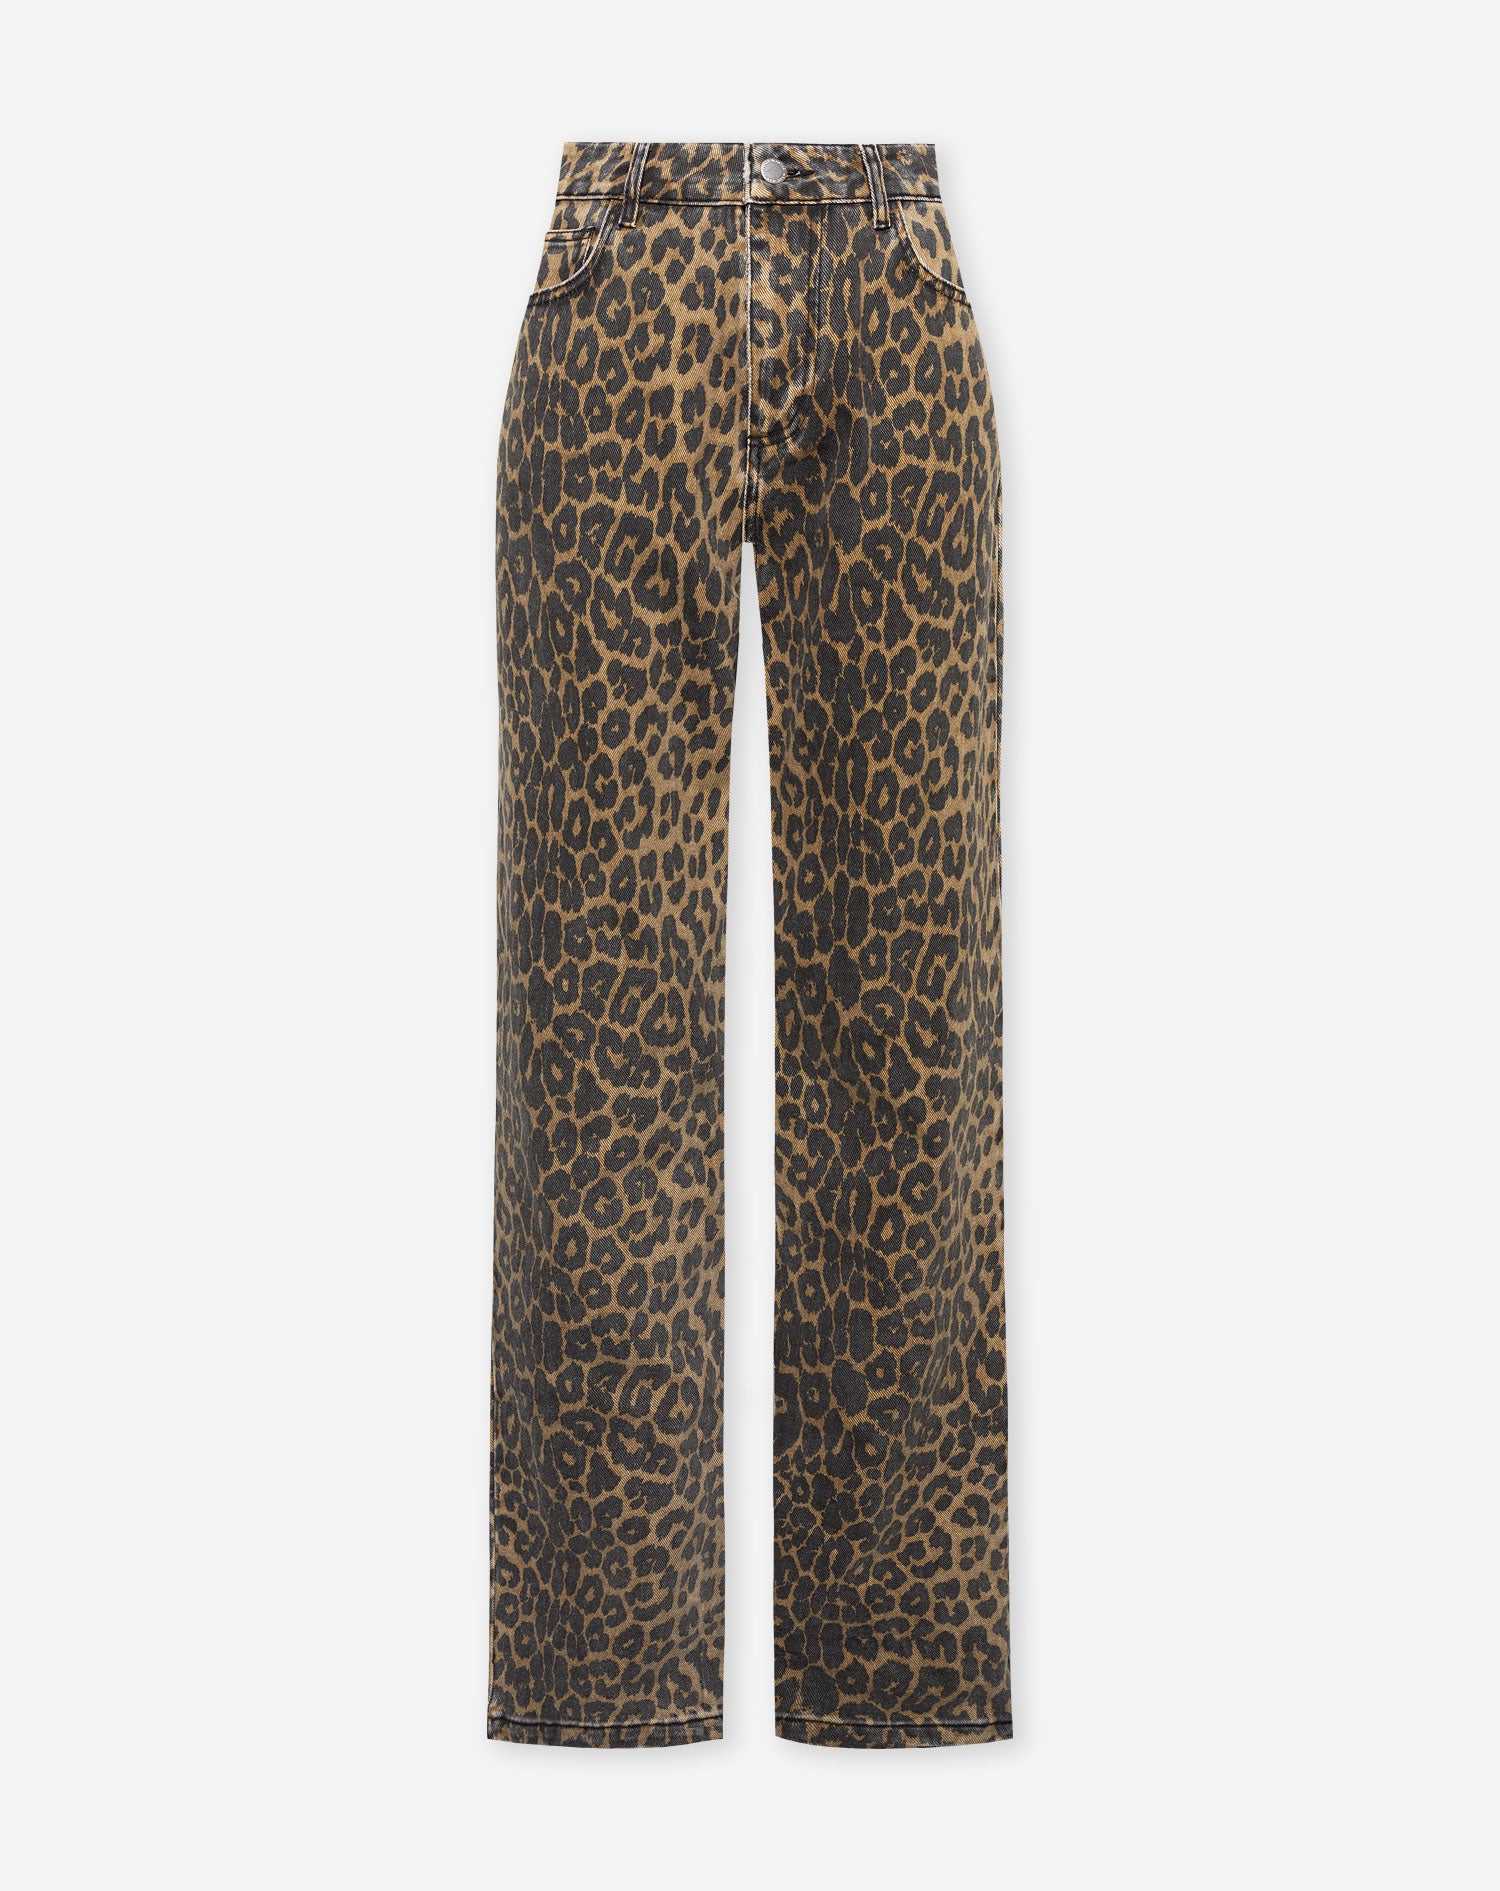 Black White Leopard Print Pants Women Animale Snow Cheetah Street Style Print  Trousers Oversized Trendy Wide Leg Pants Gift Idea - Pants & Capris -  AliExpress